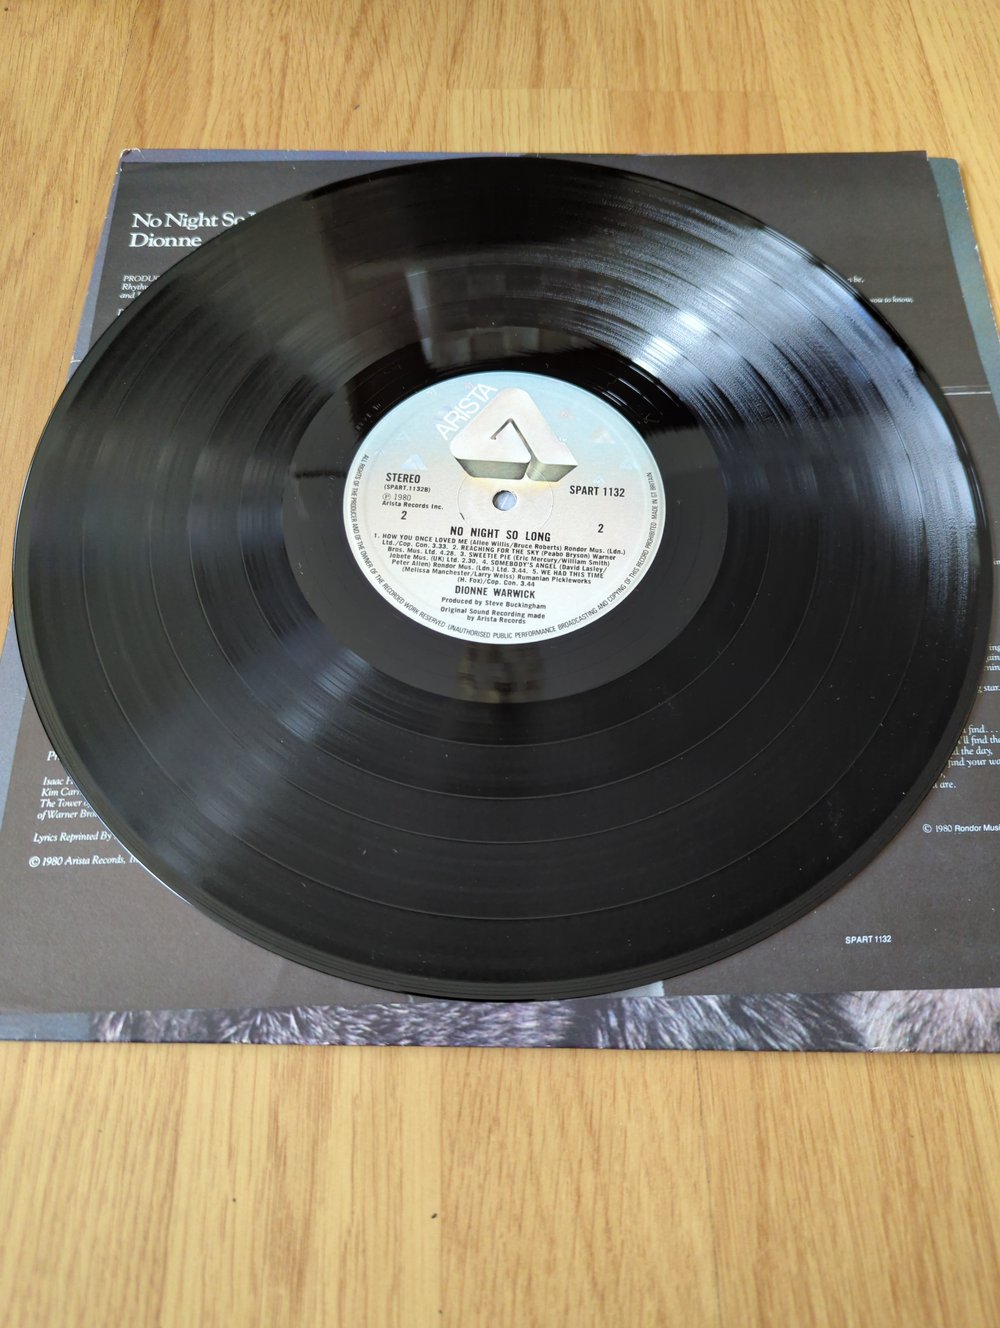 Dionne Warwick No Night So Long Signed Vinyl